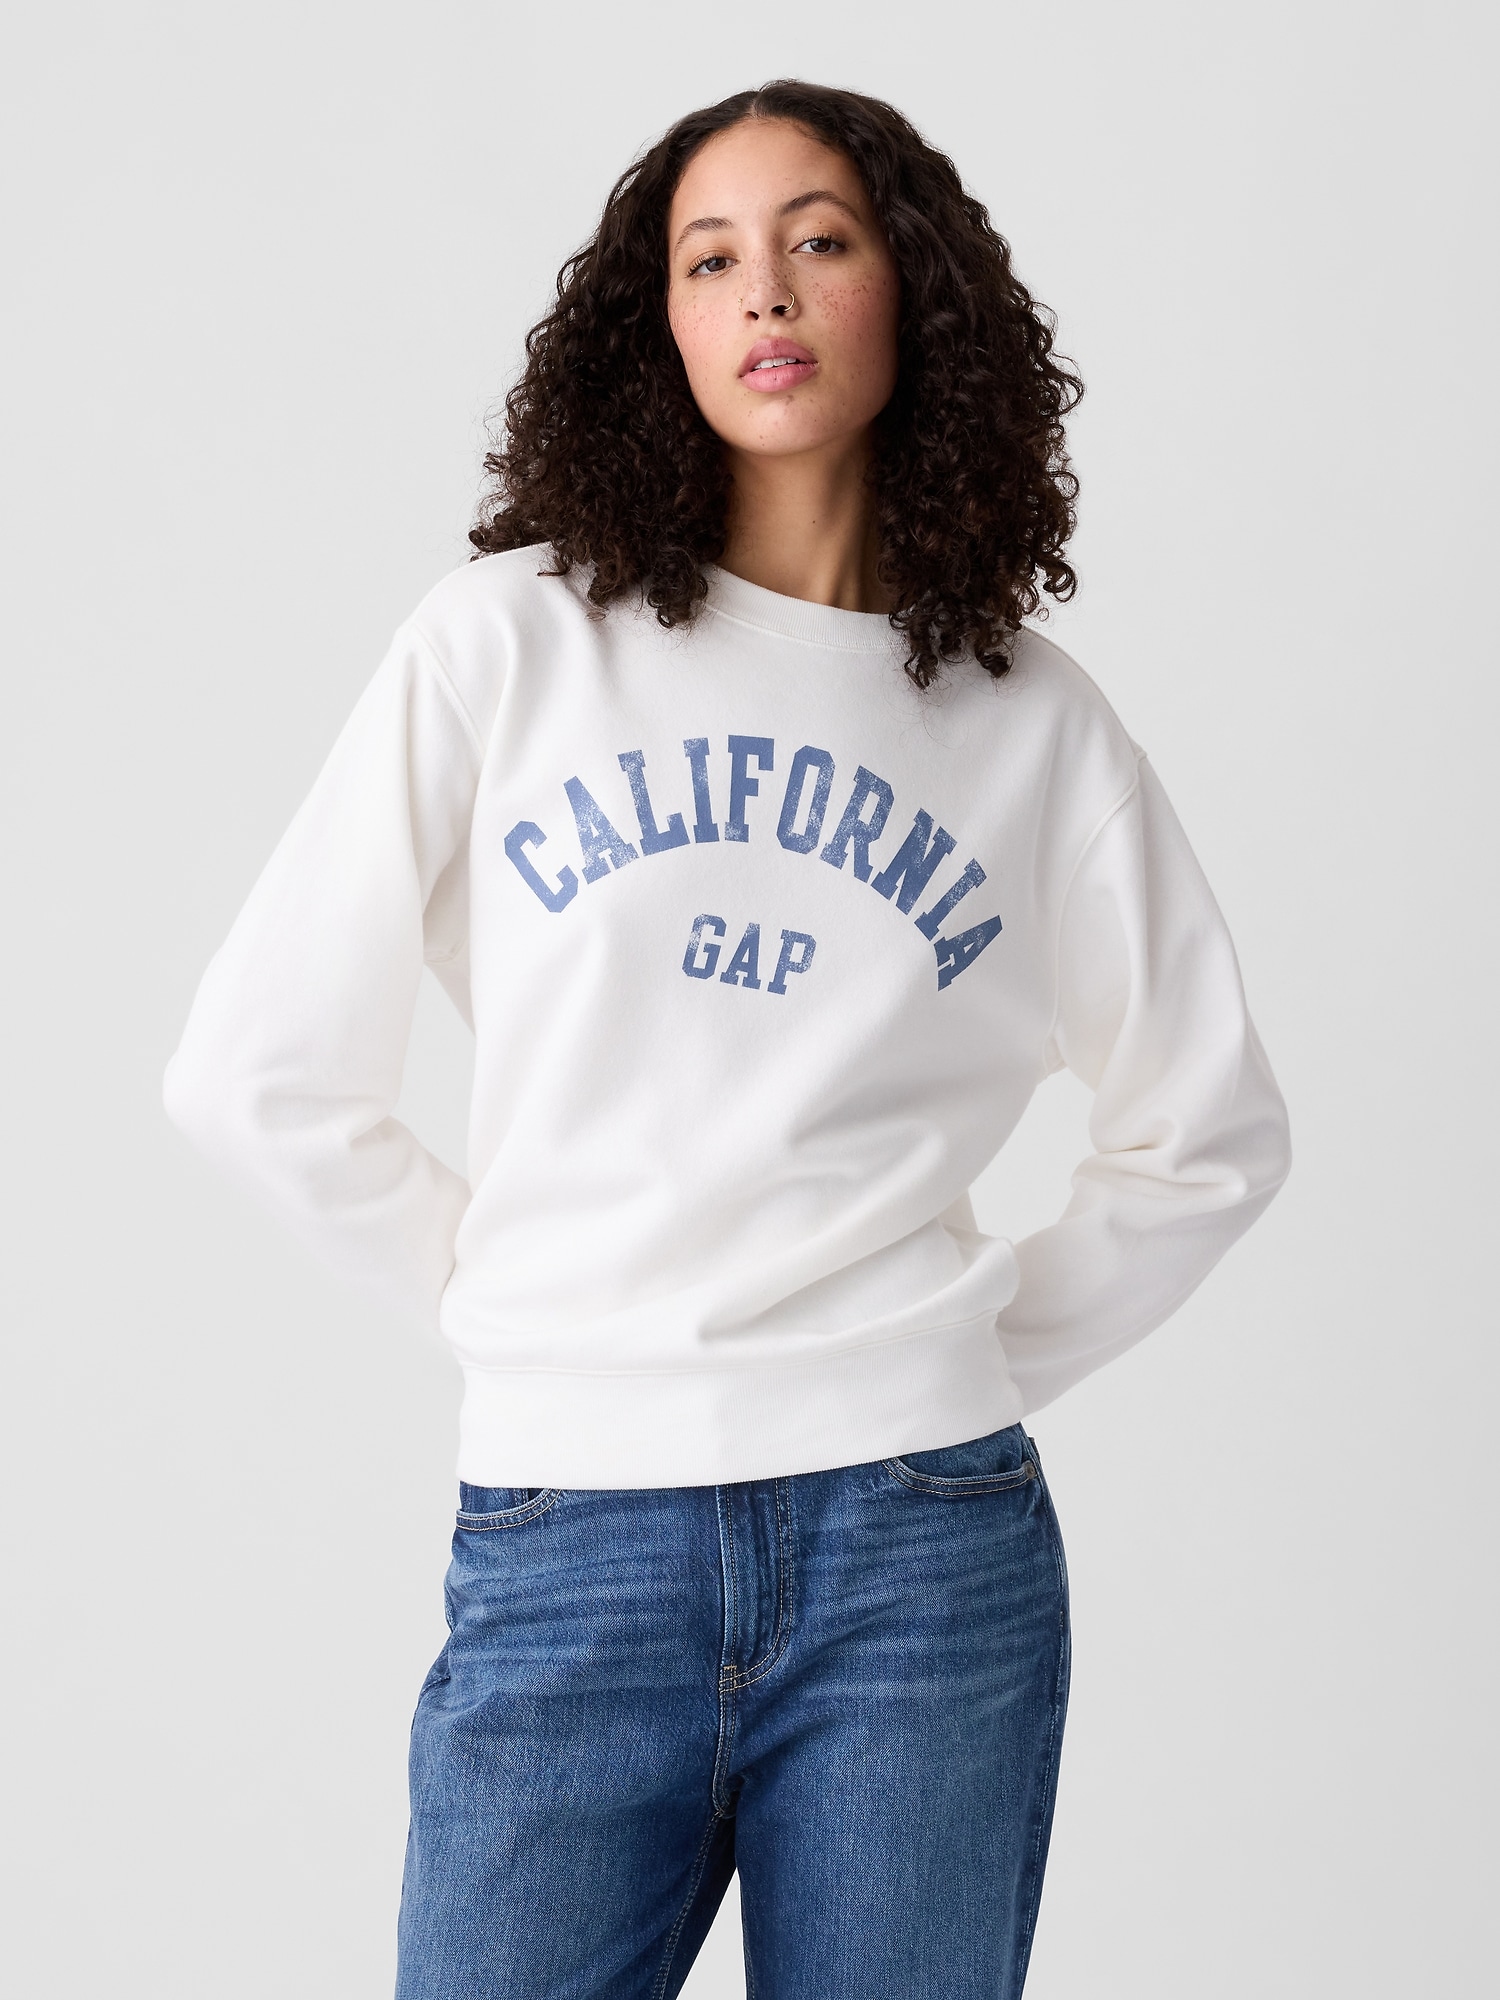 Relaxed Gap Graphic Sweatshirt